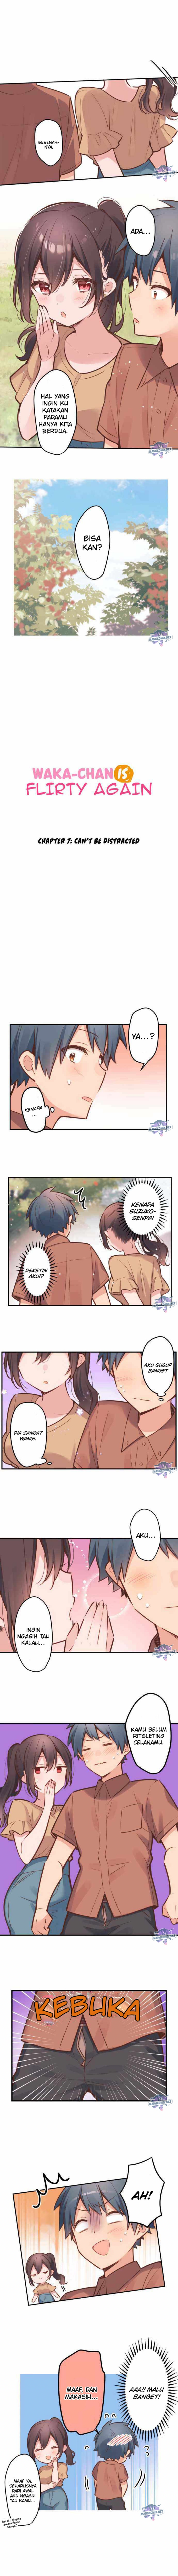 Waka-chan Is Flirty Again Chapter 07 2